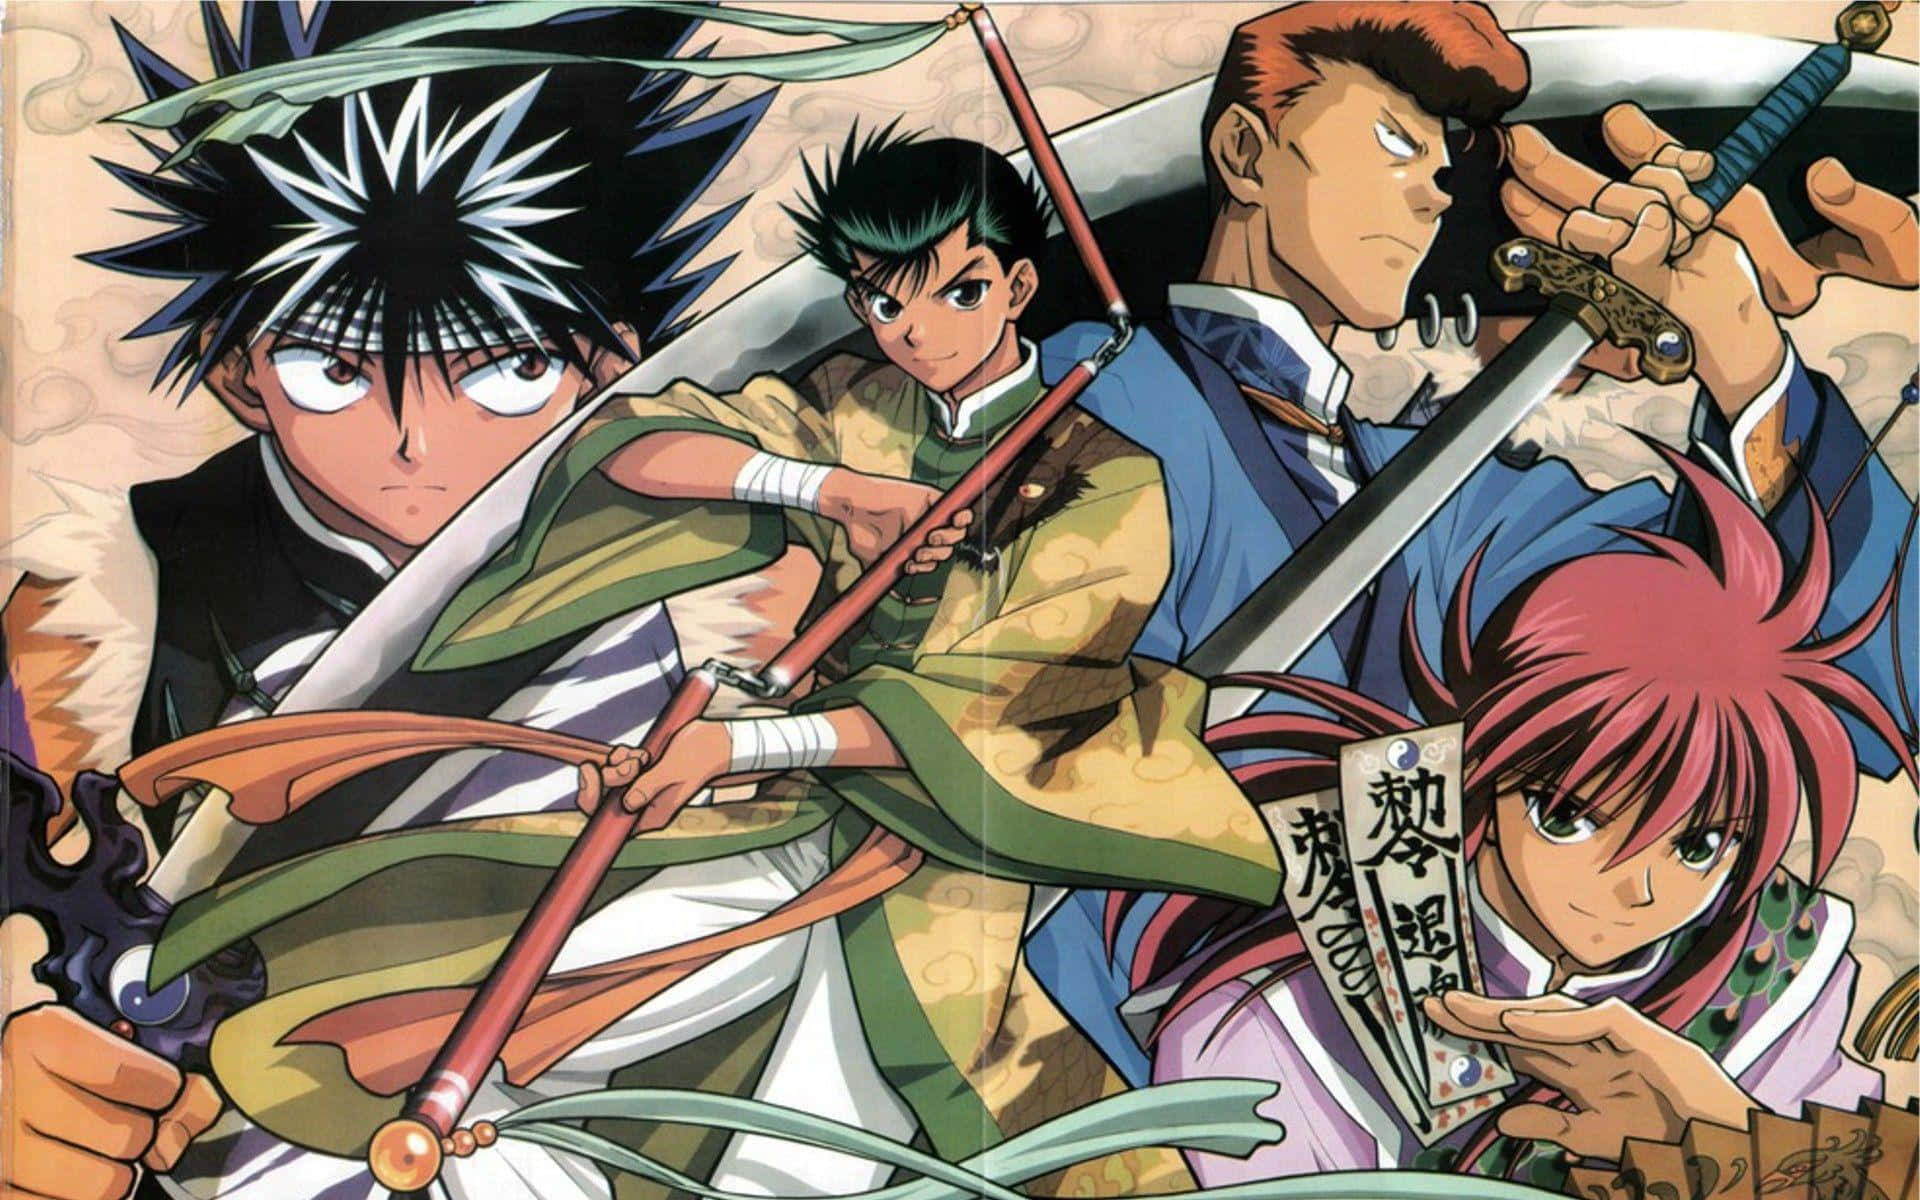 Yusuke and his gang battle their foes in Yu Yu Hakusho